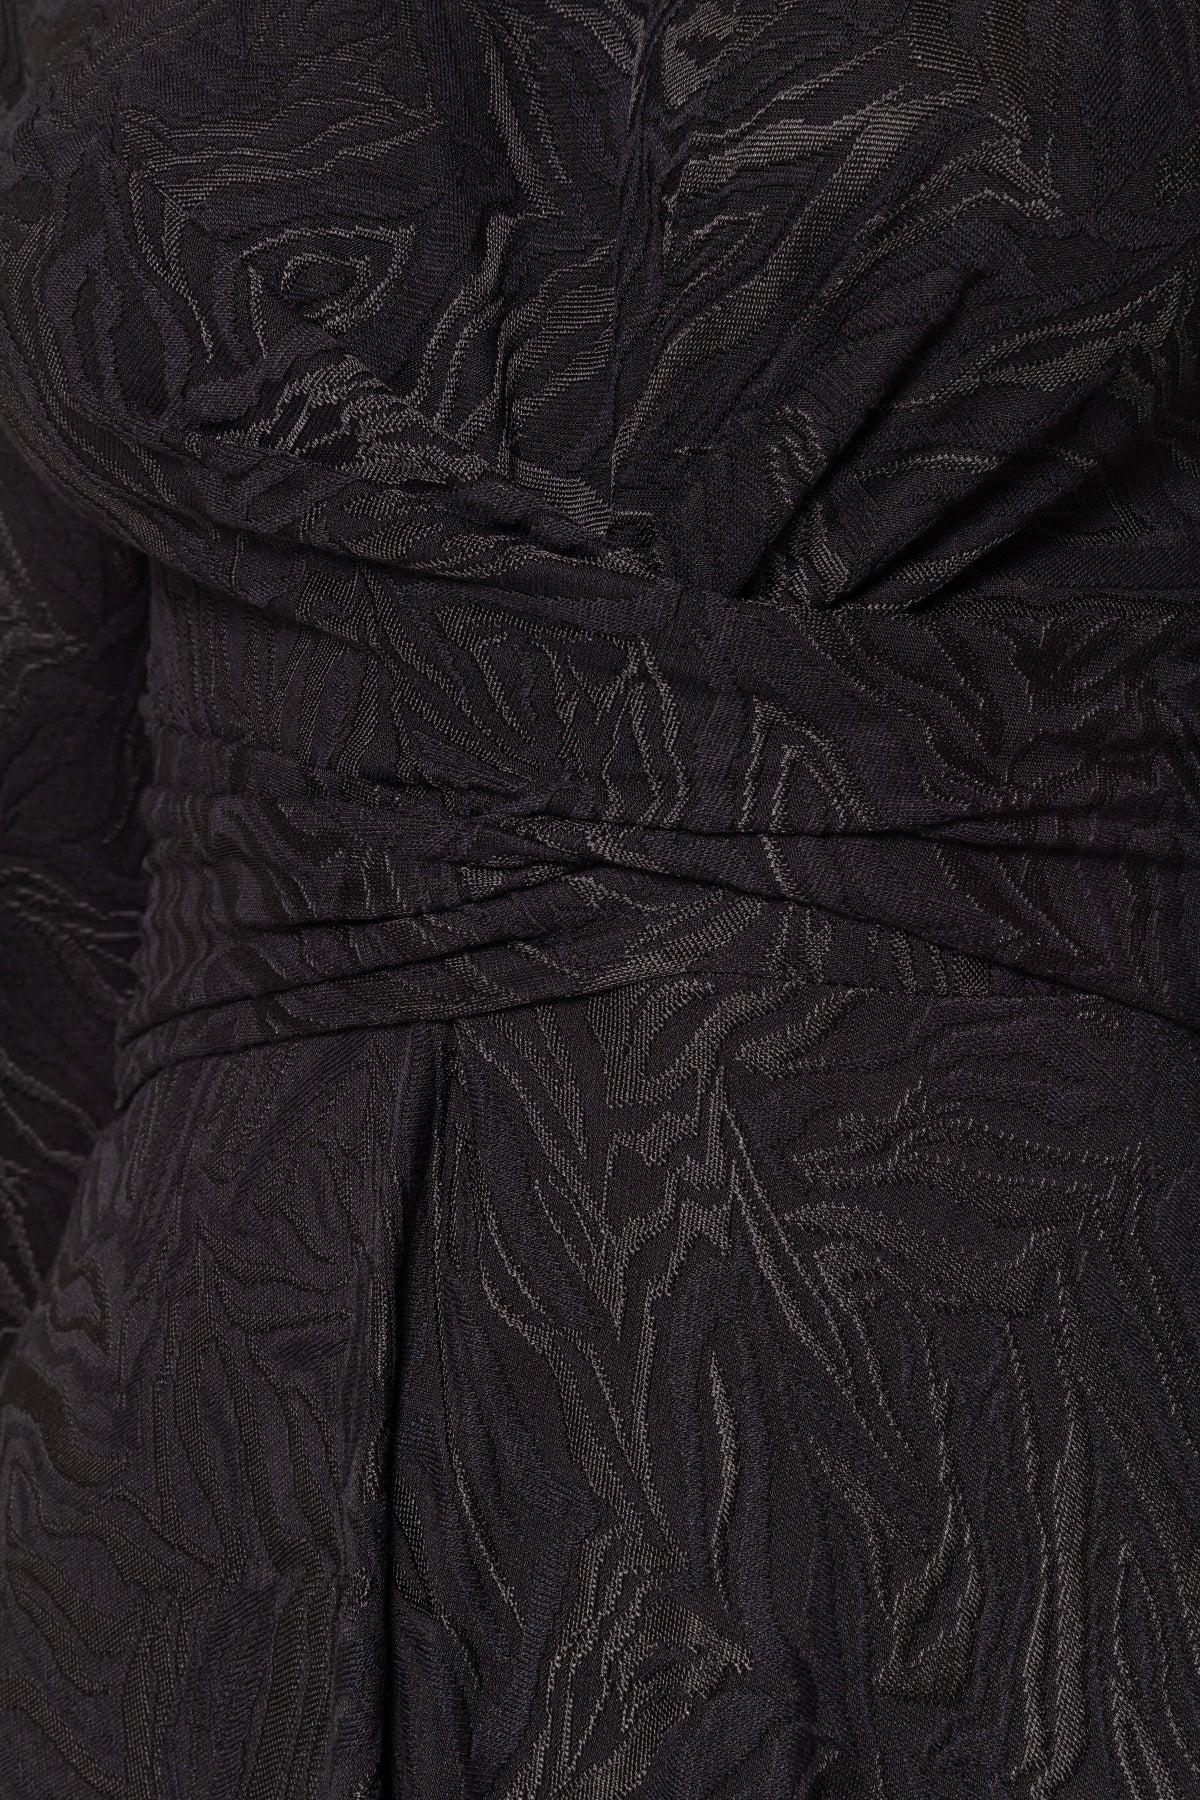 Black jersey dress. With swirl pattern